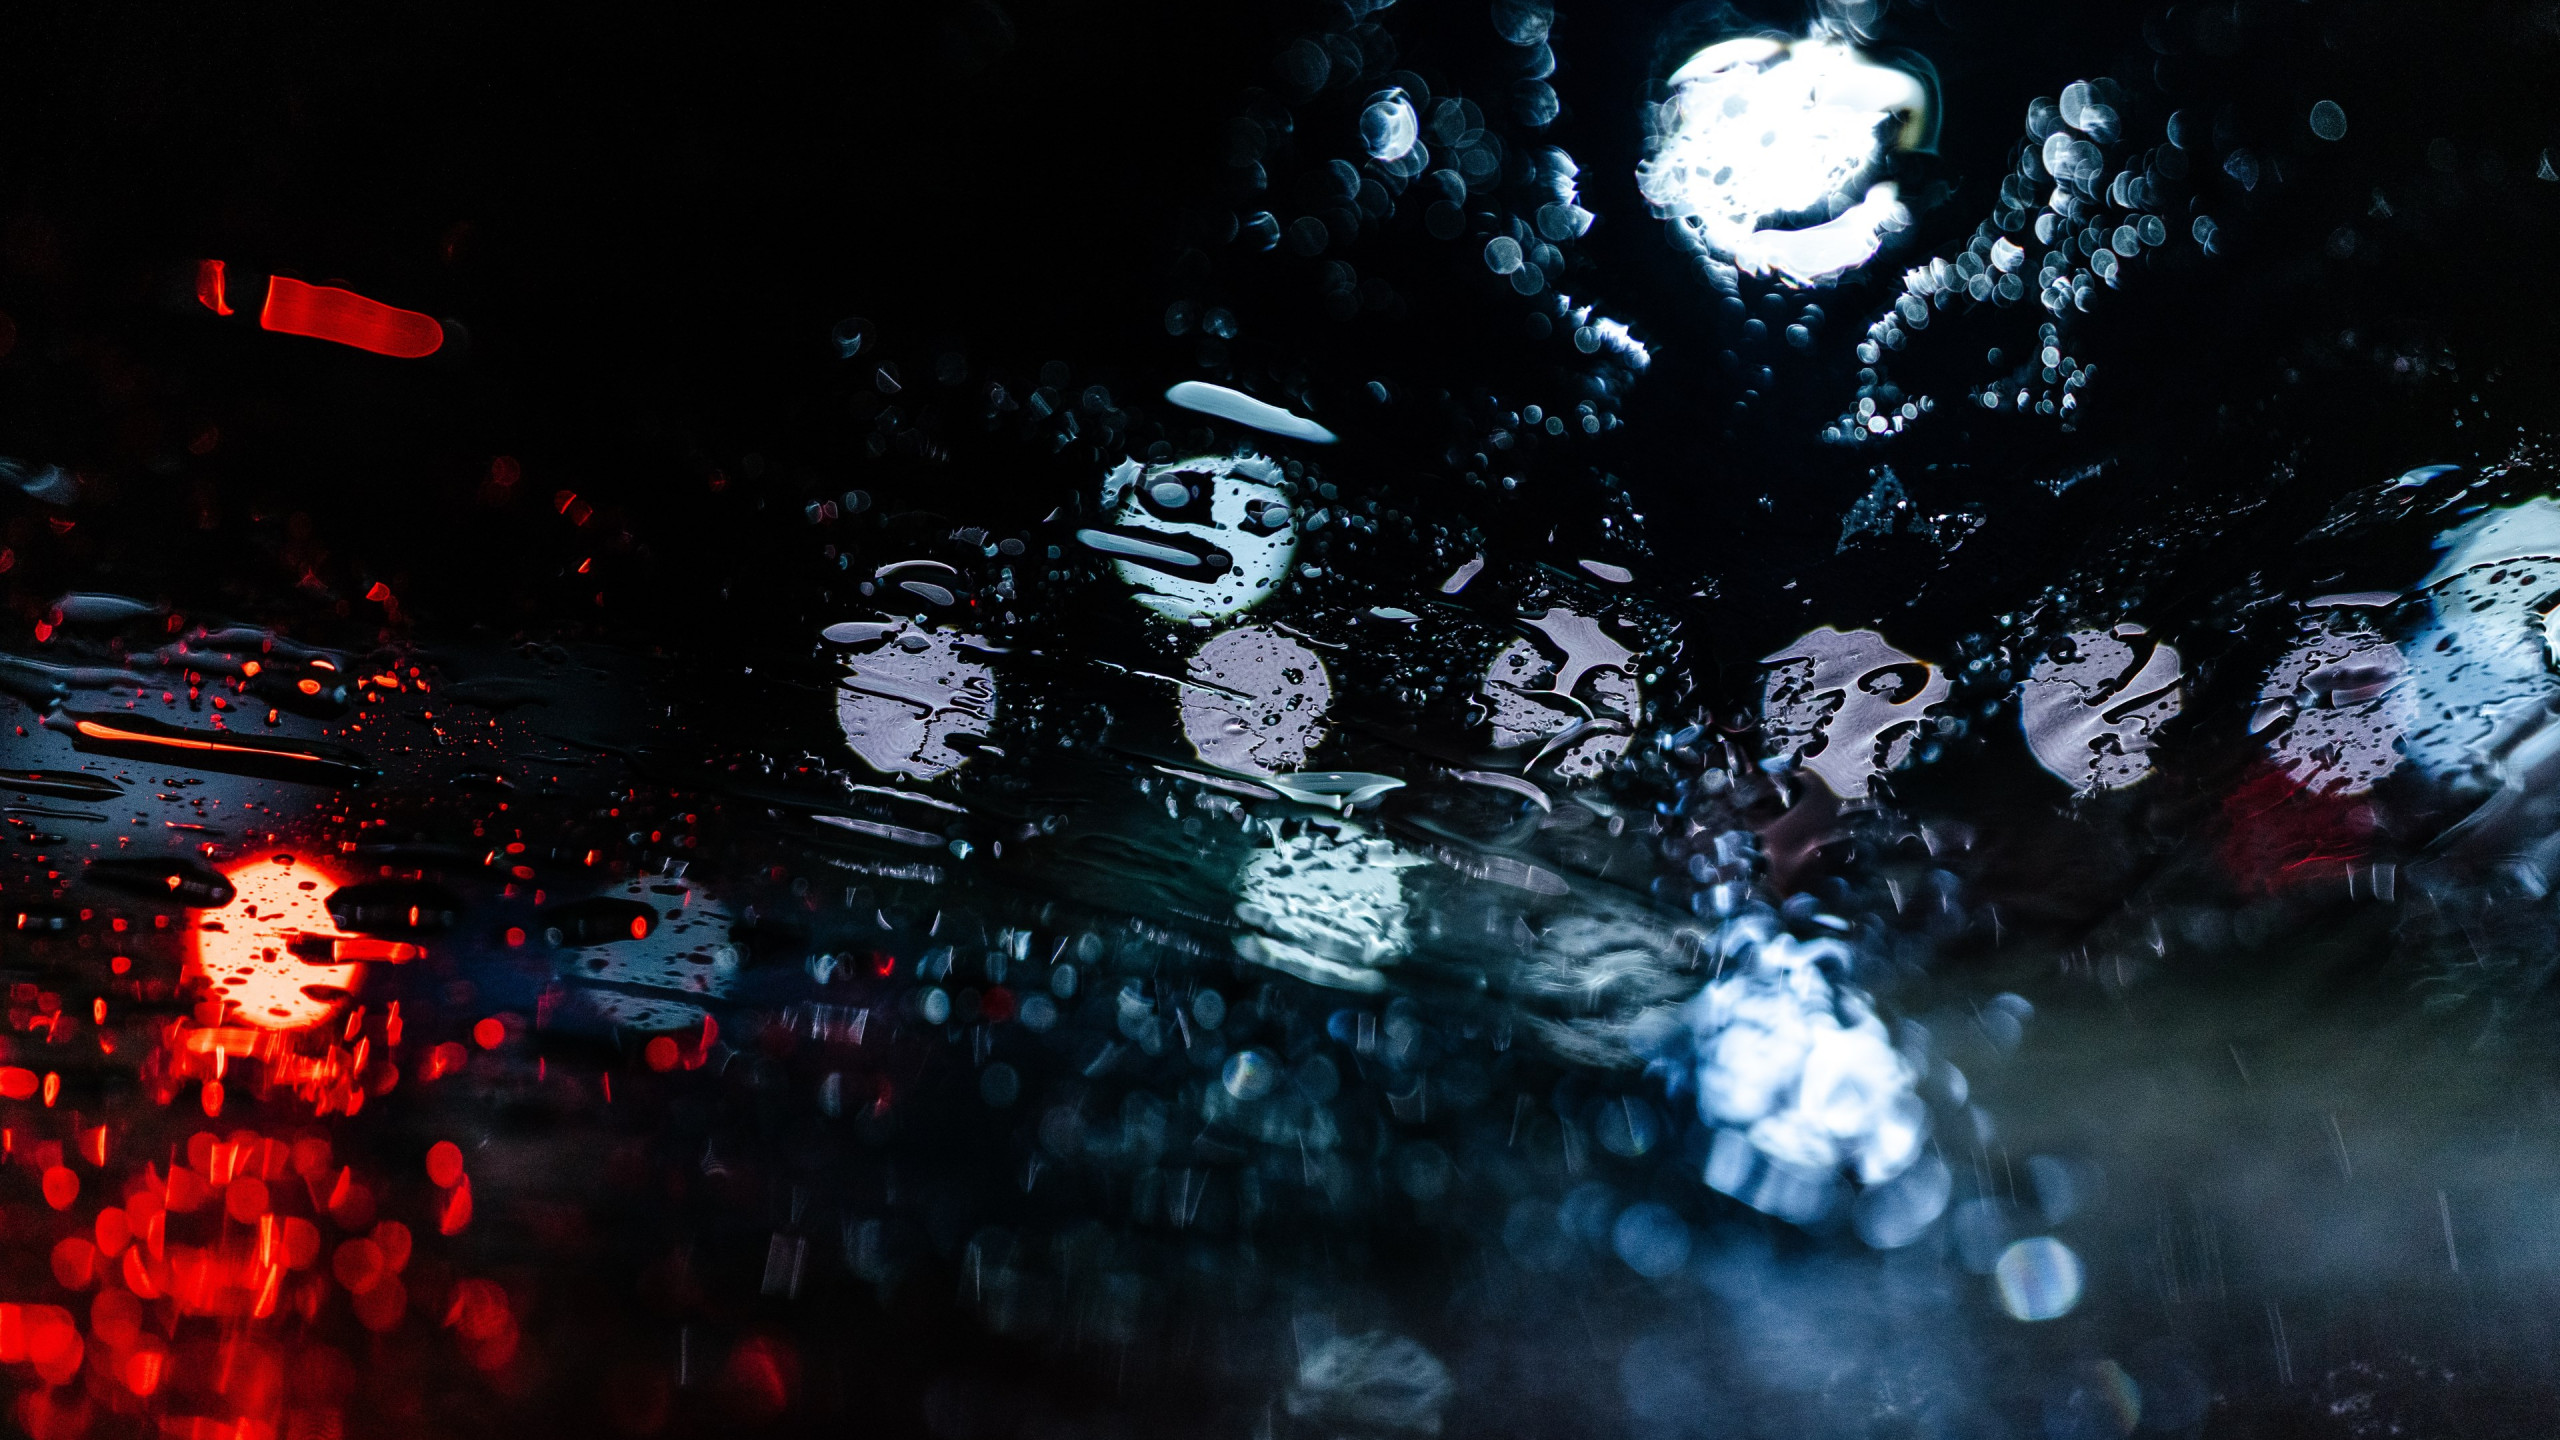 Rainy nights wallpaper 2560x1440